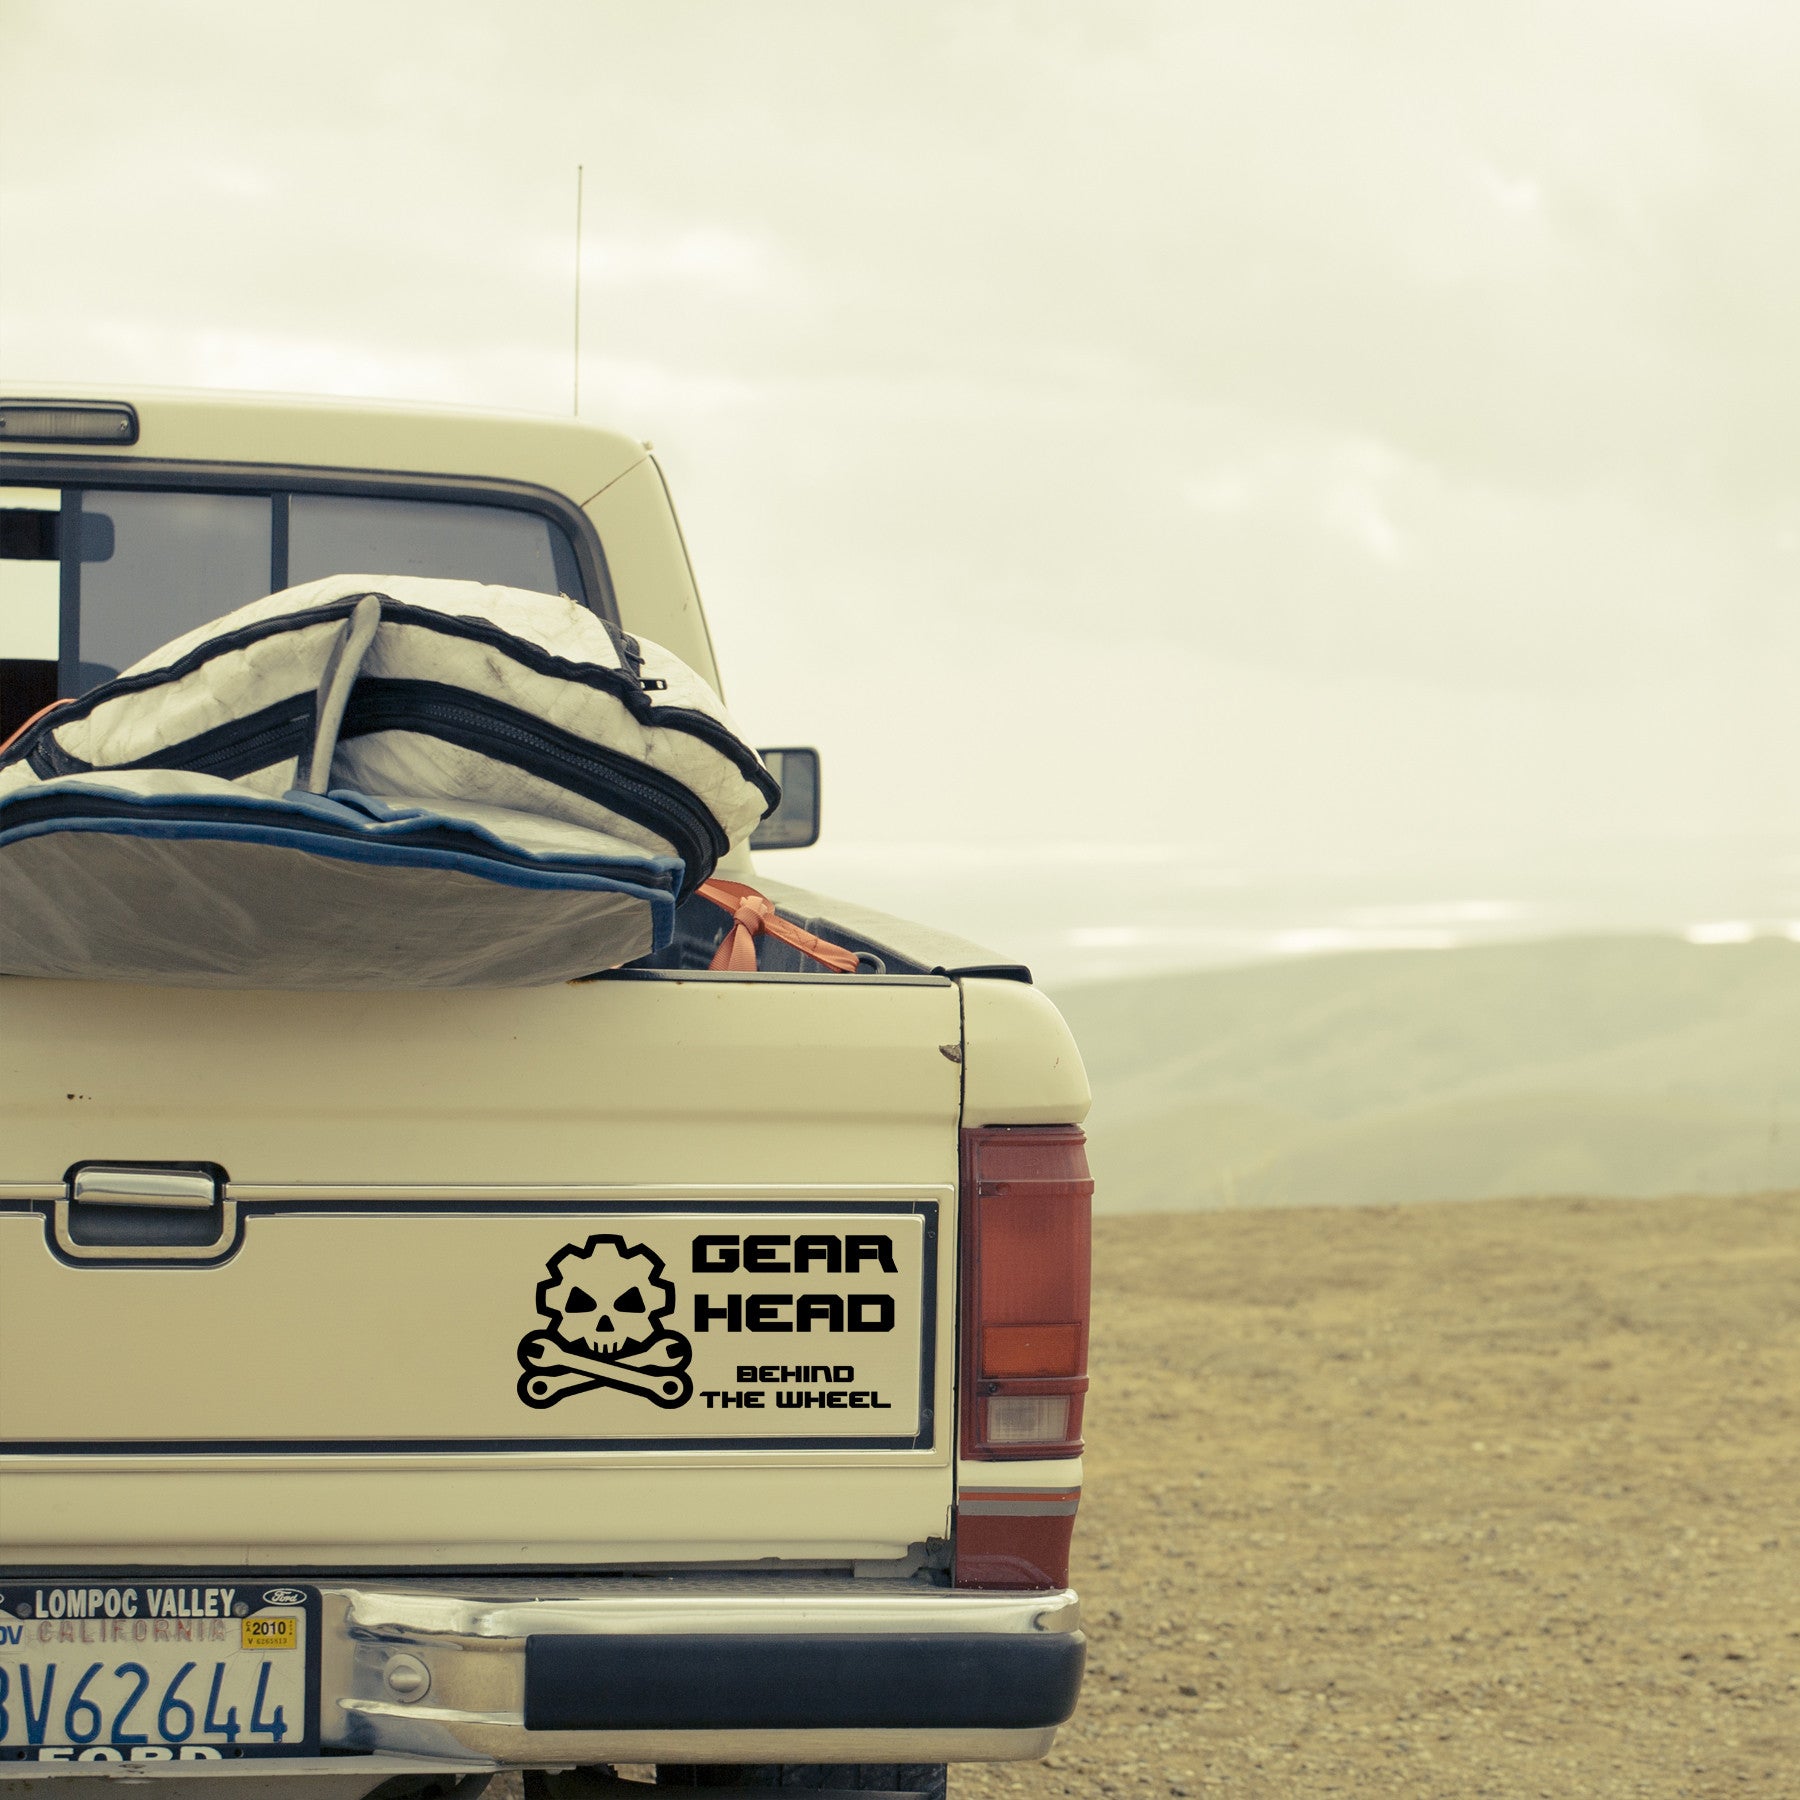 Gearhead behind the wheel | Bumper sticker - Adnil Creations